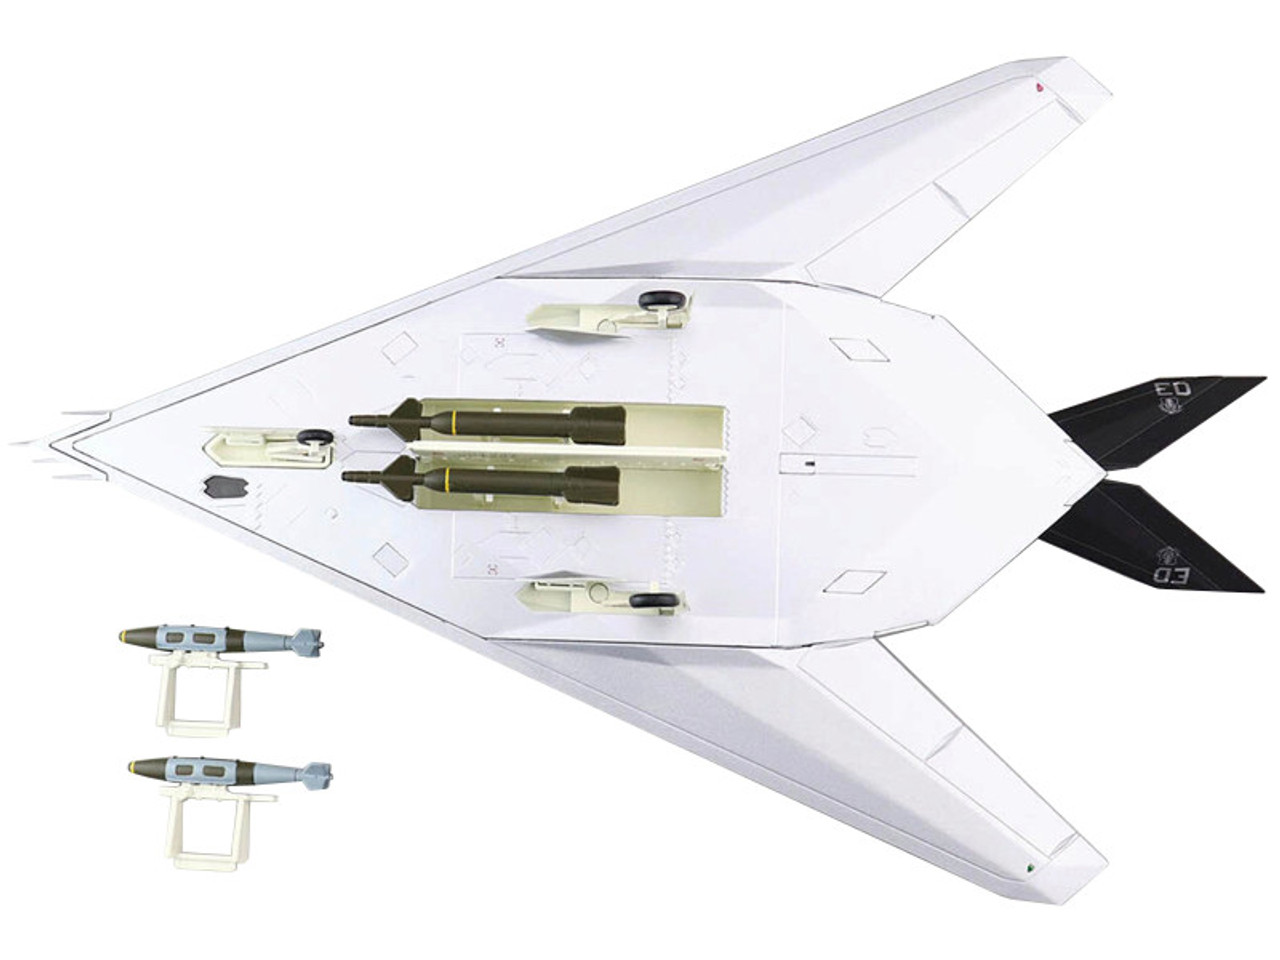 Lockheed F-117A Nighthawk Stealth Aircraft "Toxic Death" (1991) "Air Power Series" 1/72 Diecast Model by Hobby Master